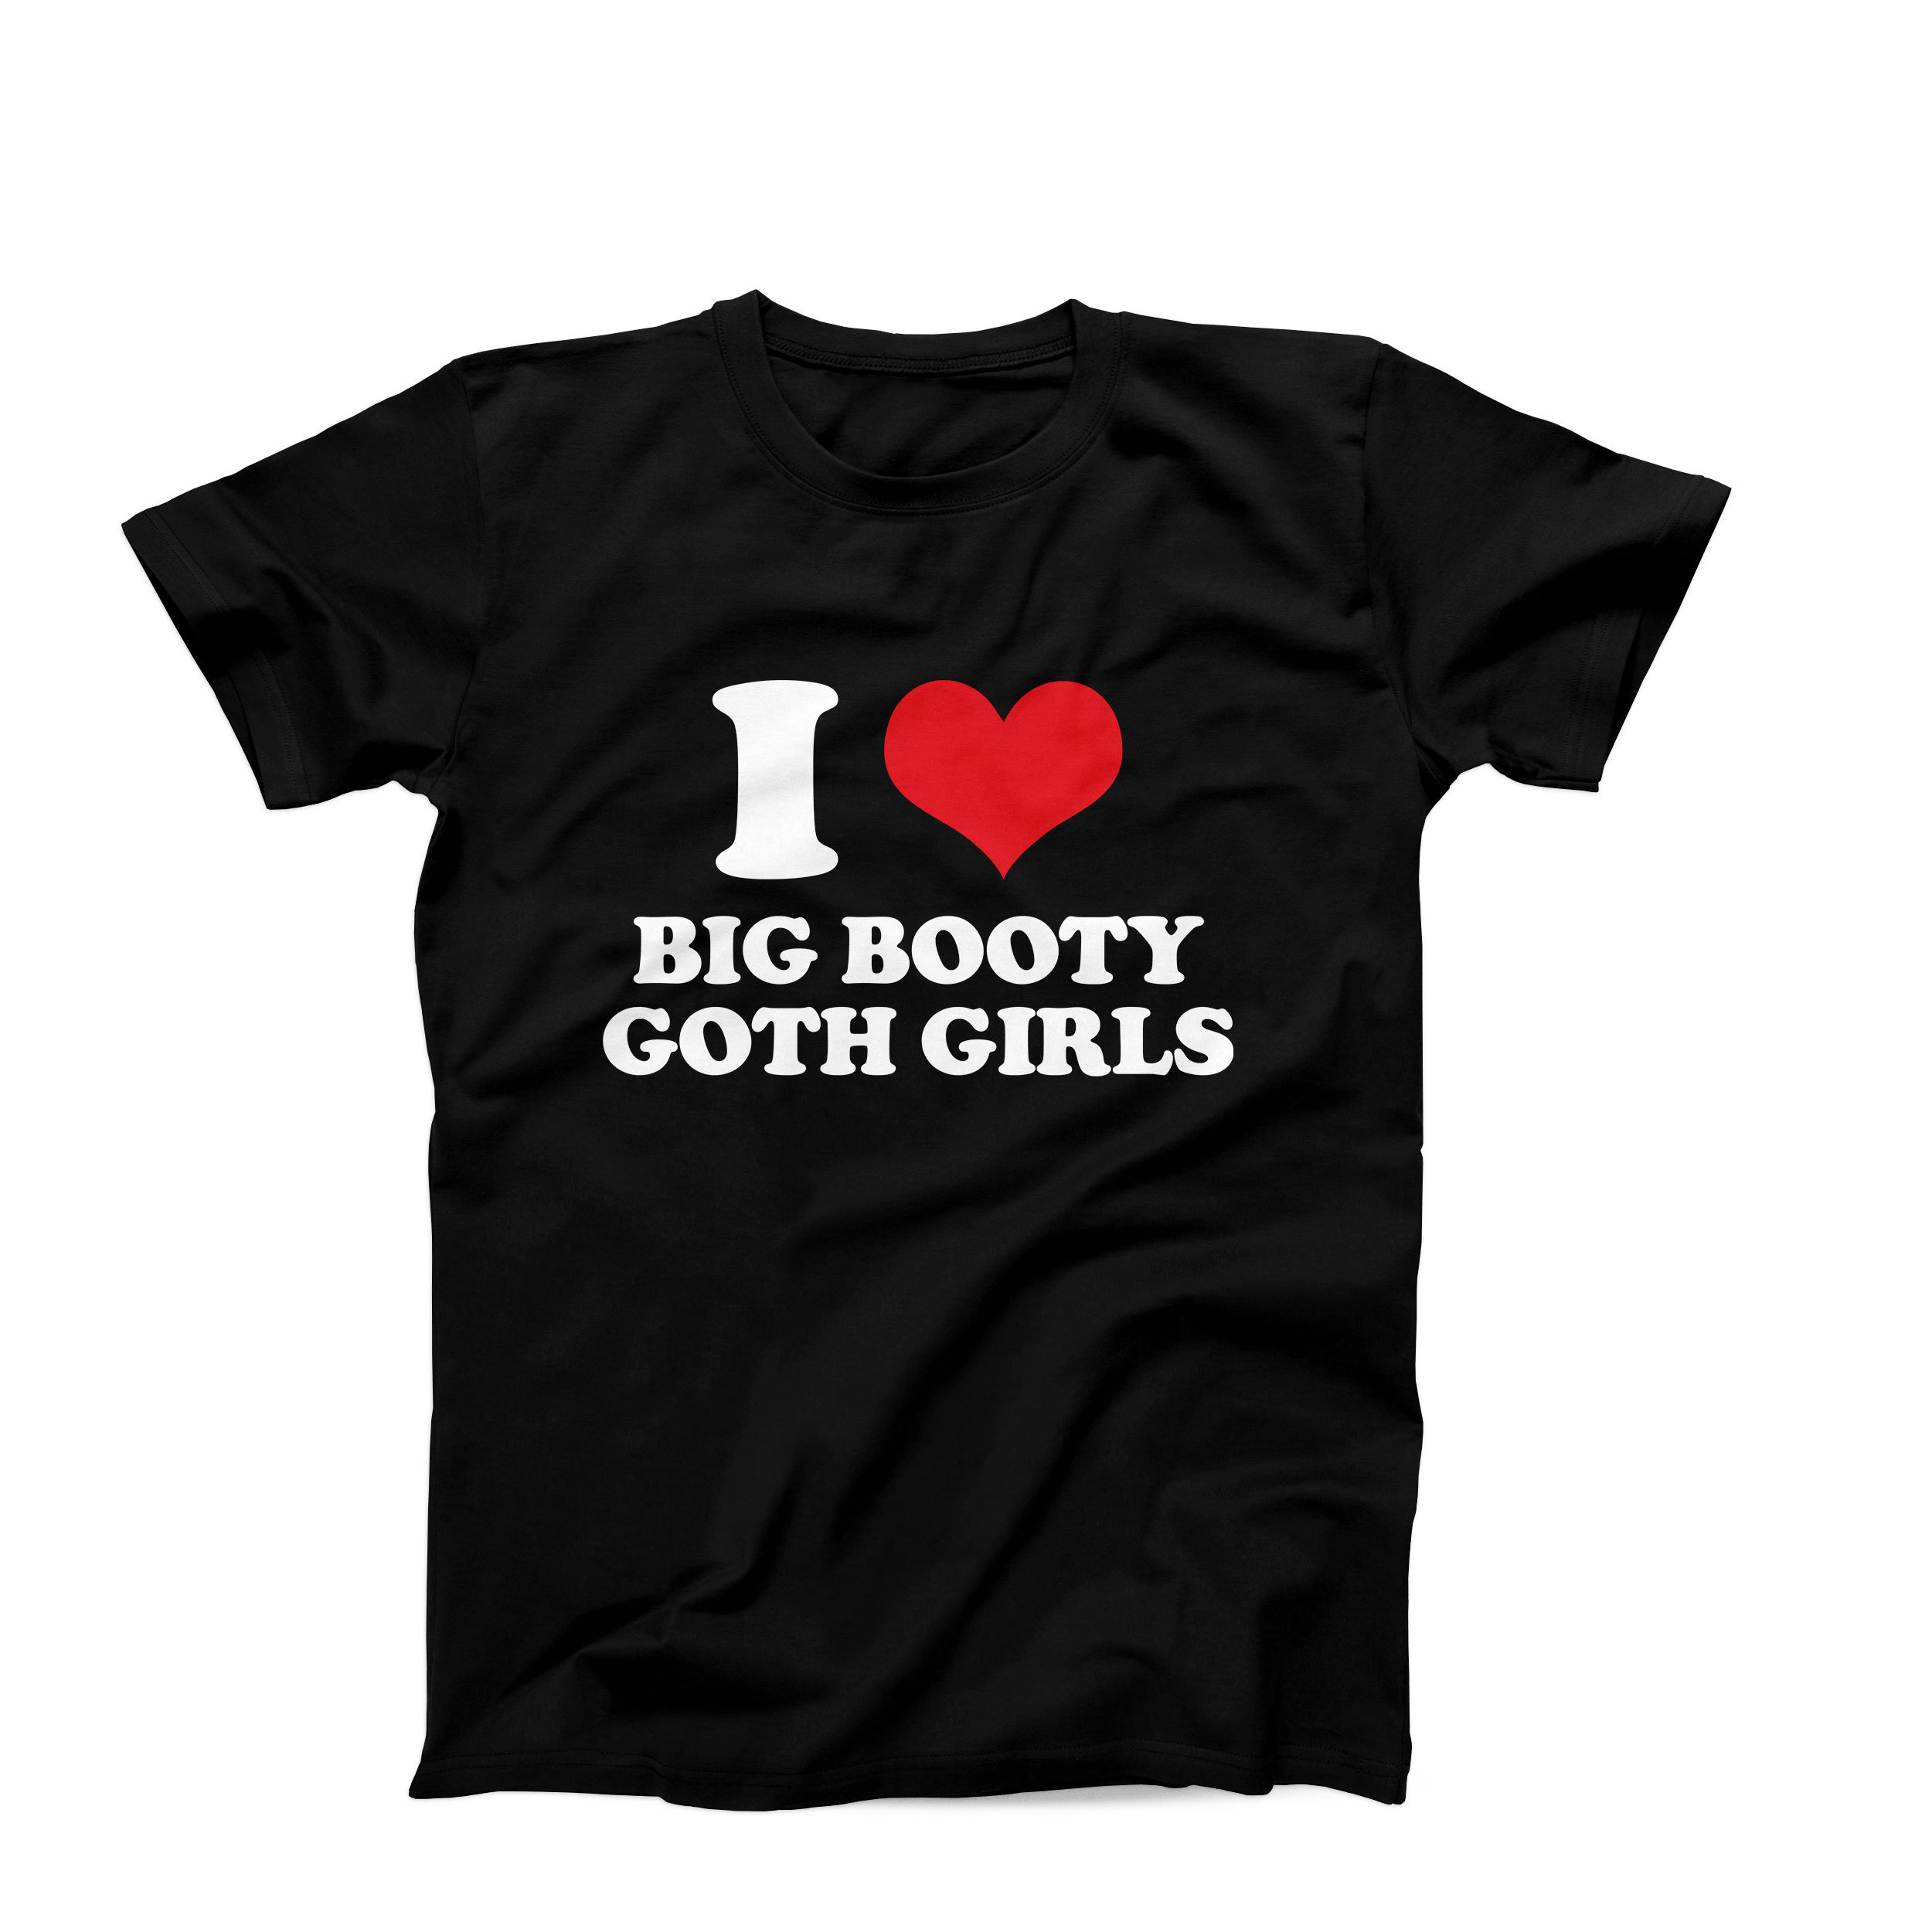 bill schultz recommends big booty goth gf pic